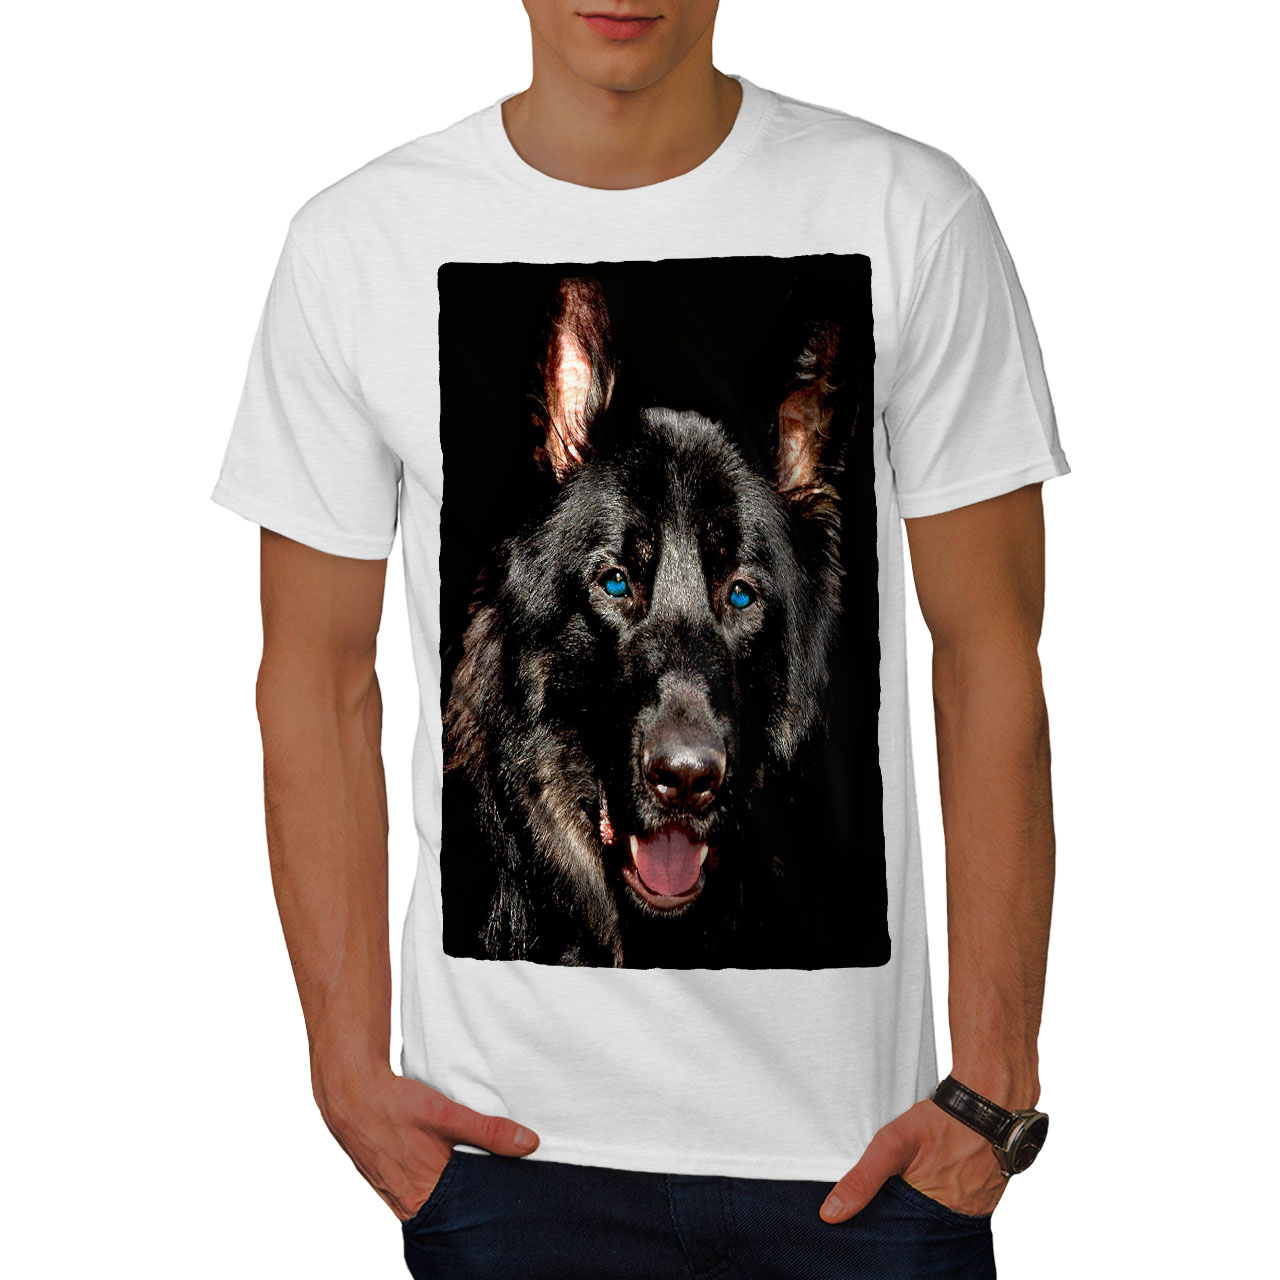 Wellcoda Animal Design Wellcoda Mens T-shirt Canine Graphic Design Printed Tee 